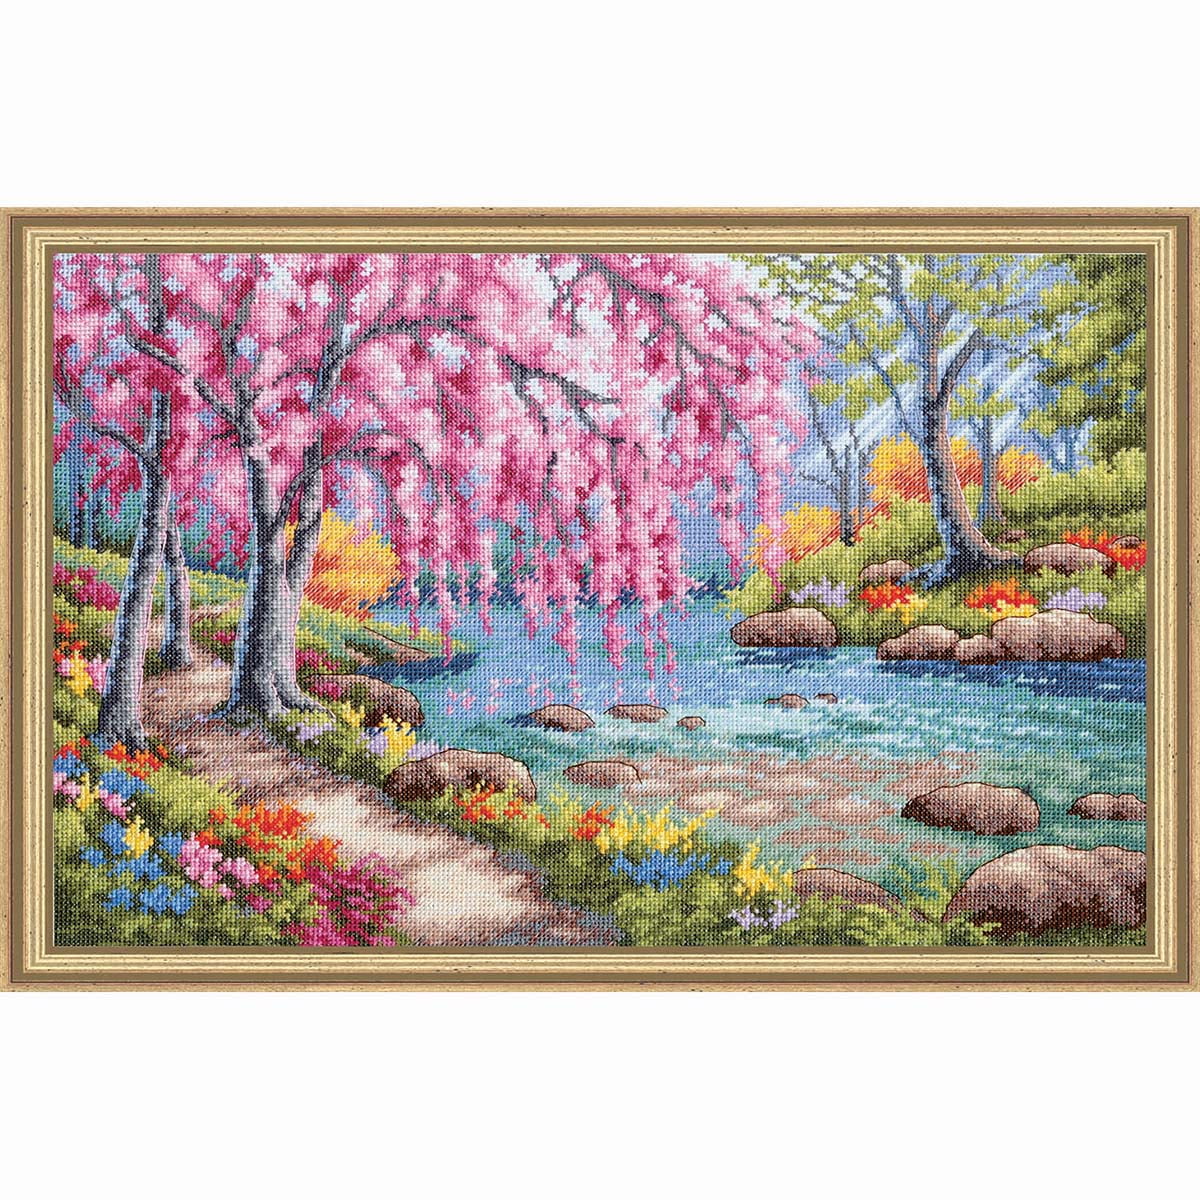 Apple Blossom Lake # 2-Counted cross stitch chart